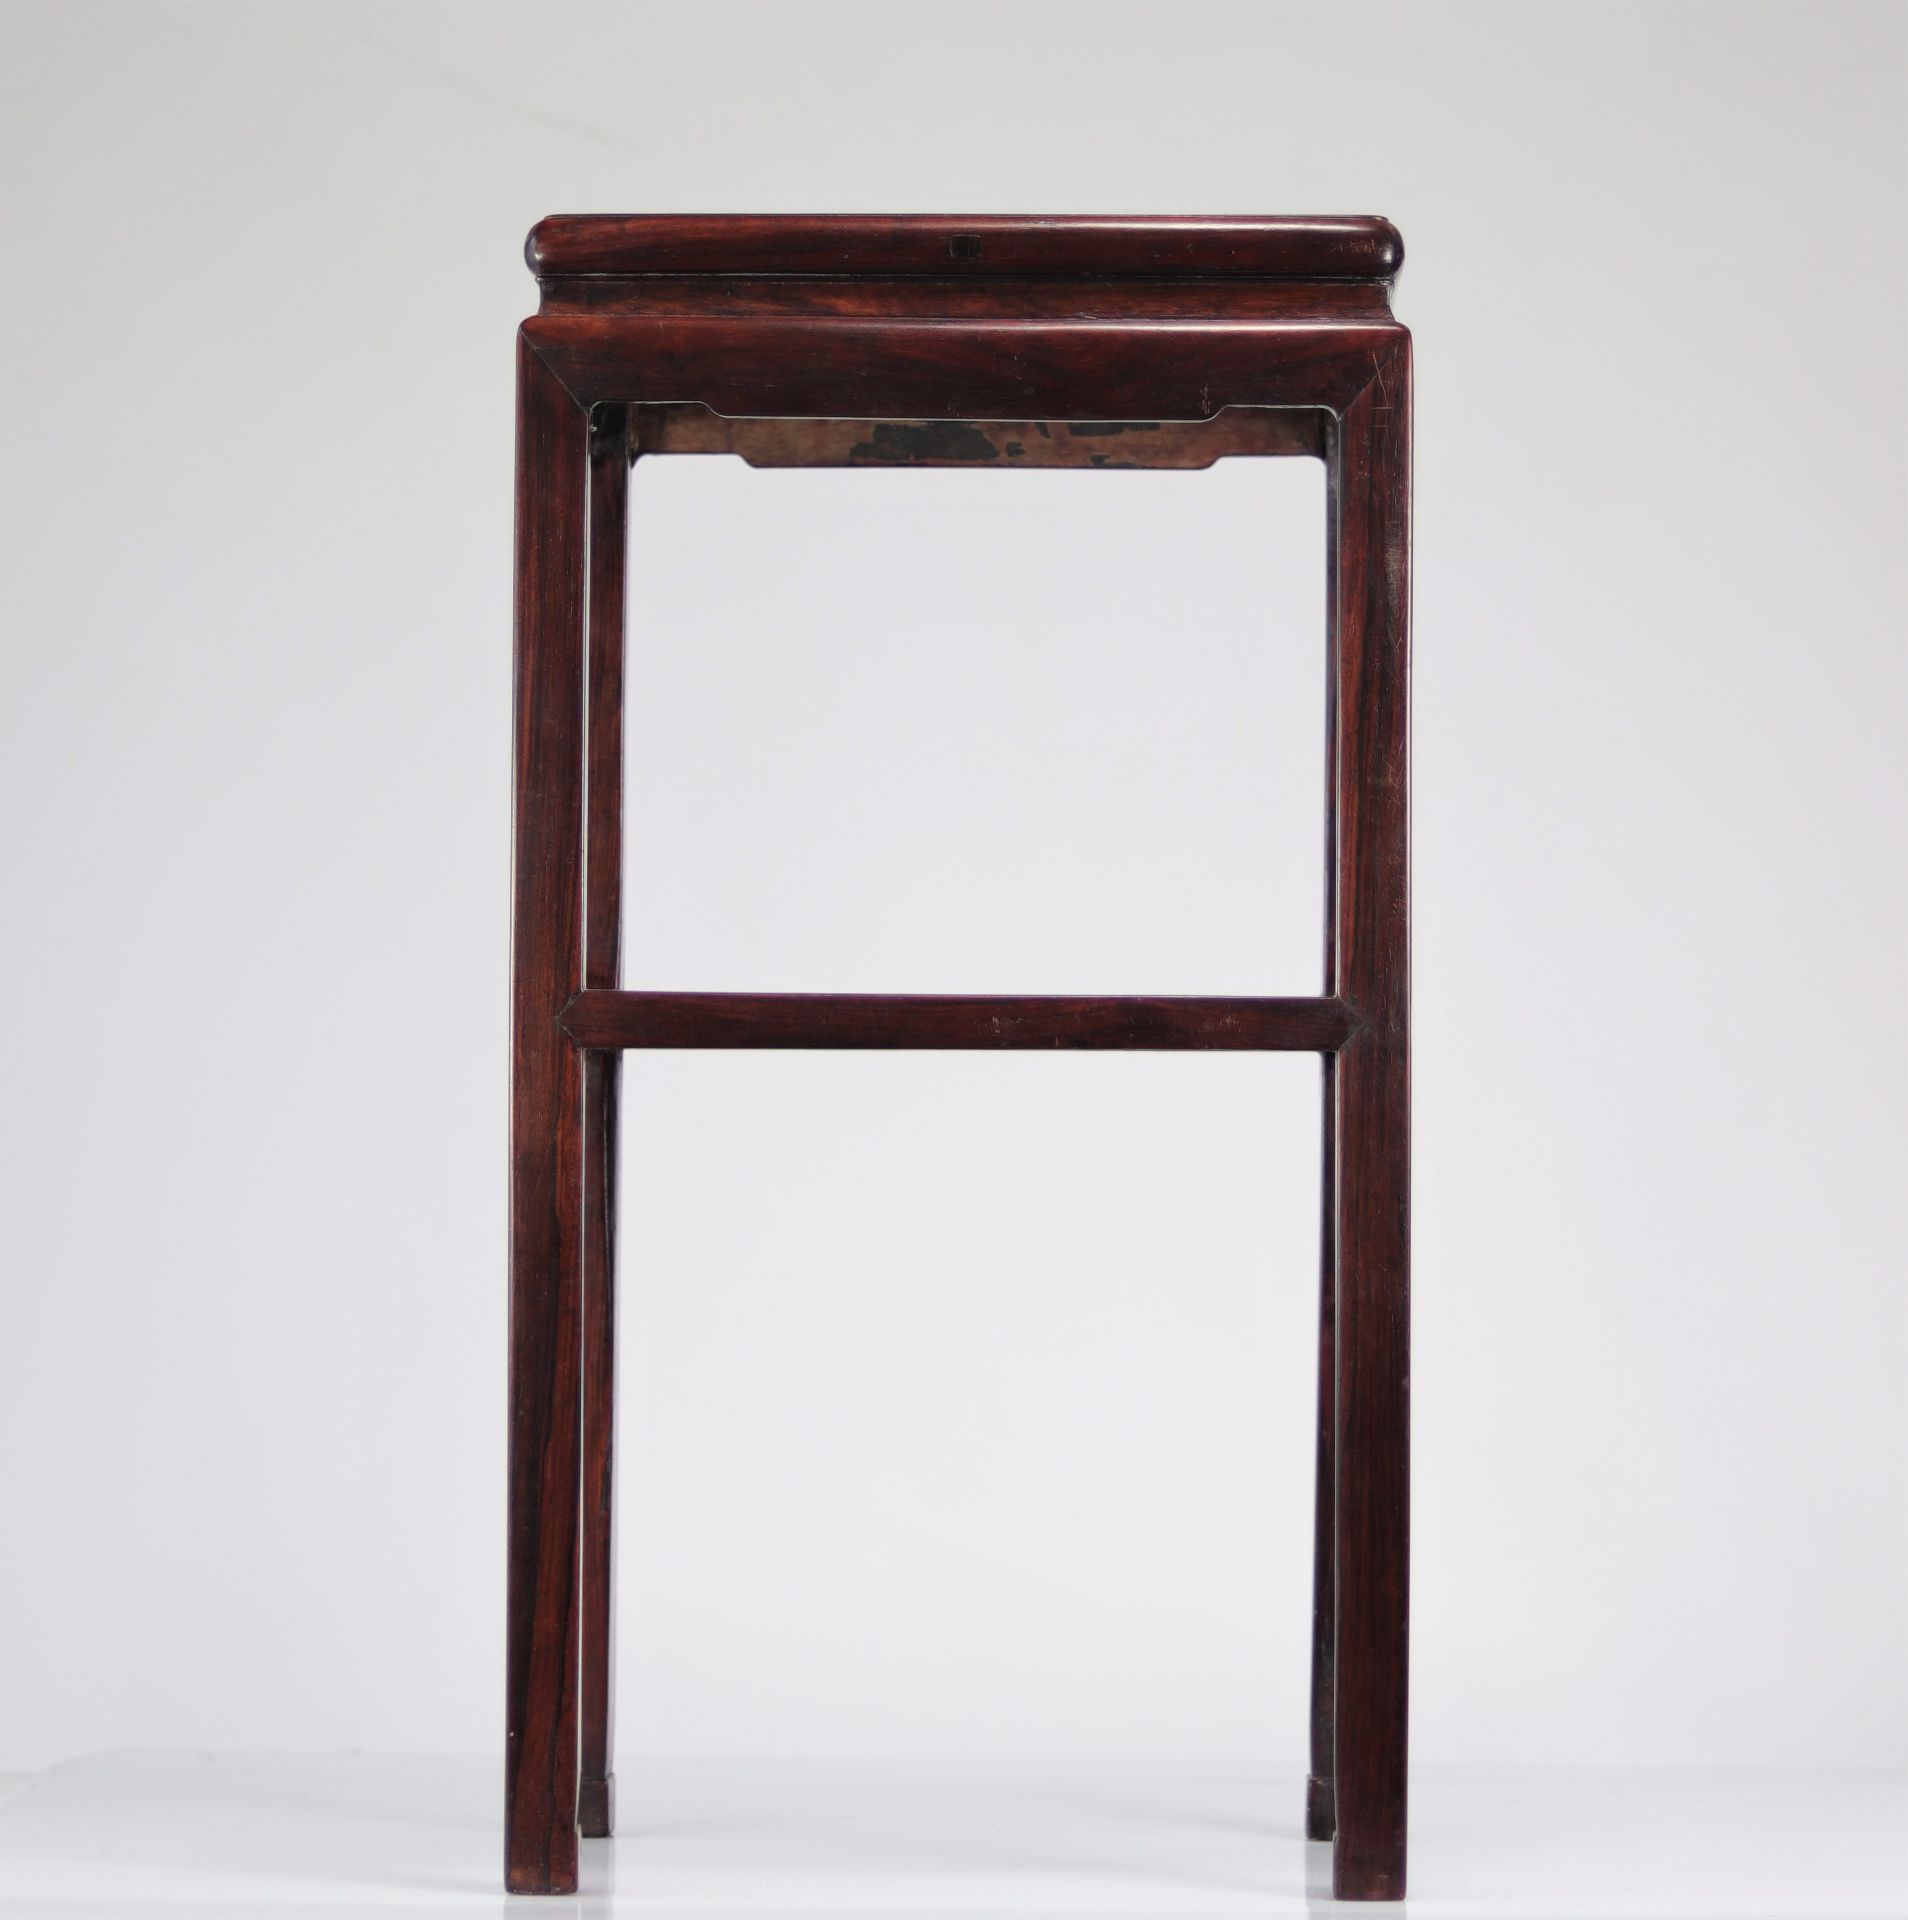 China - Precious wood tea table (evtl. huanghuali - to be verified) - 17th/18th - Bild 6 aus 7